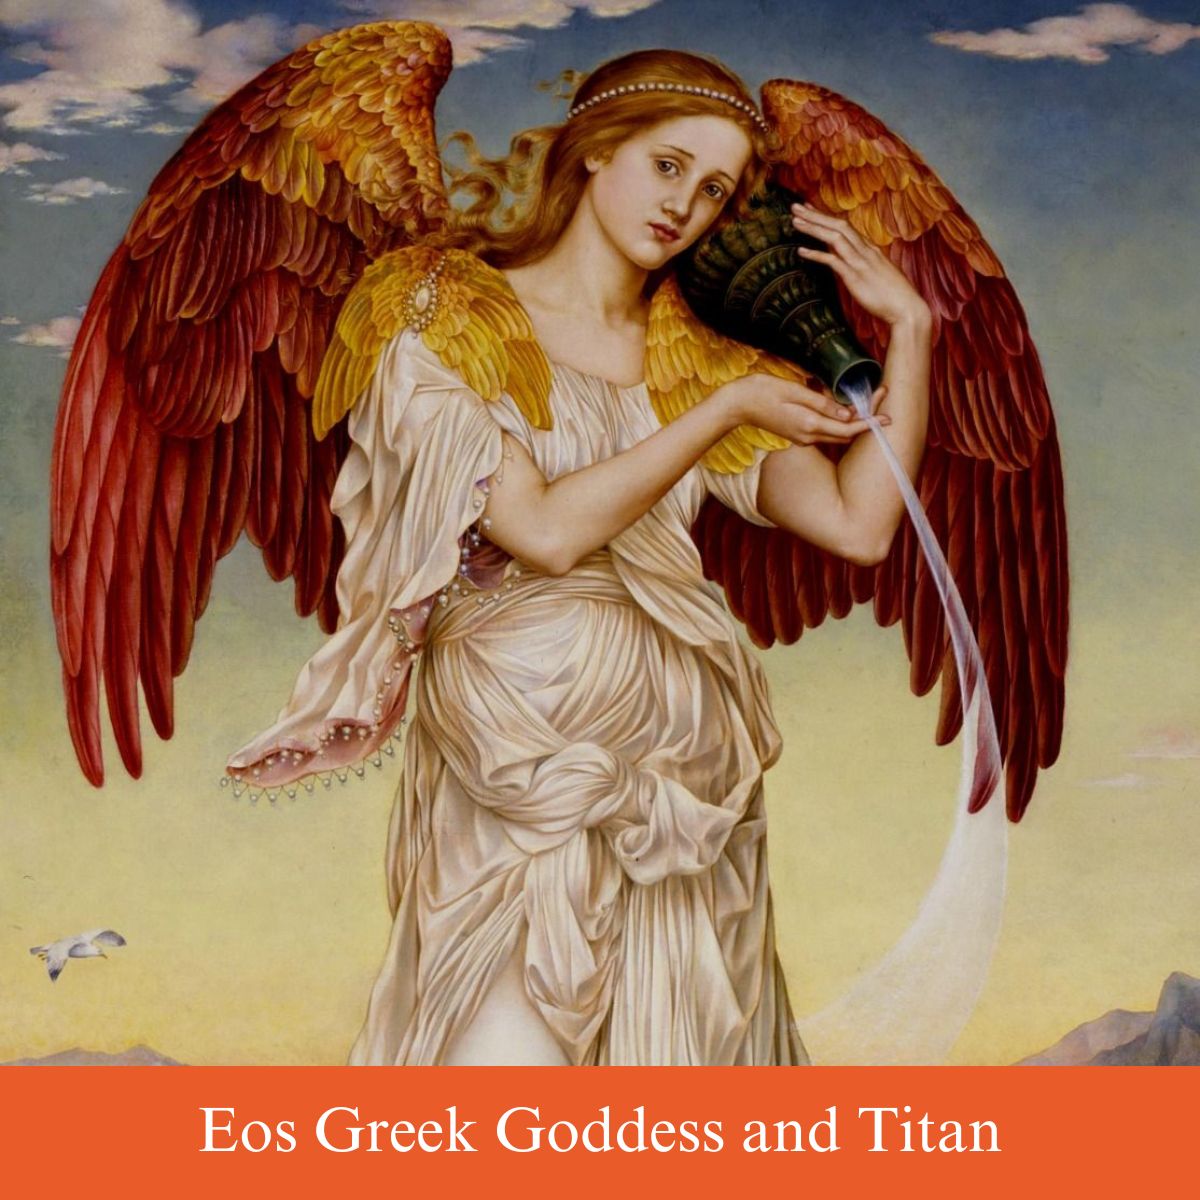 eos greek goddess